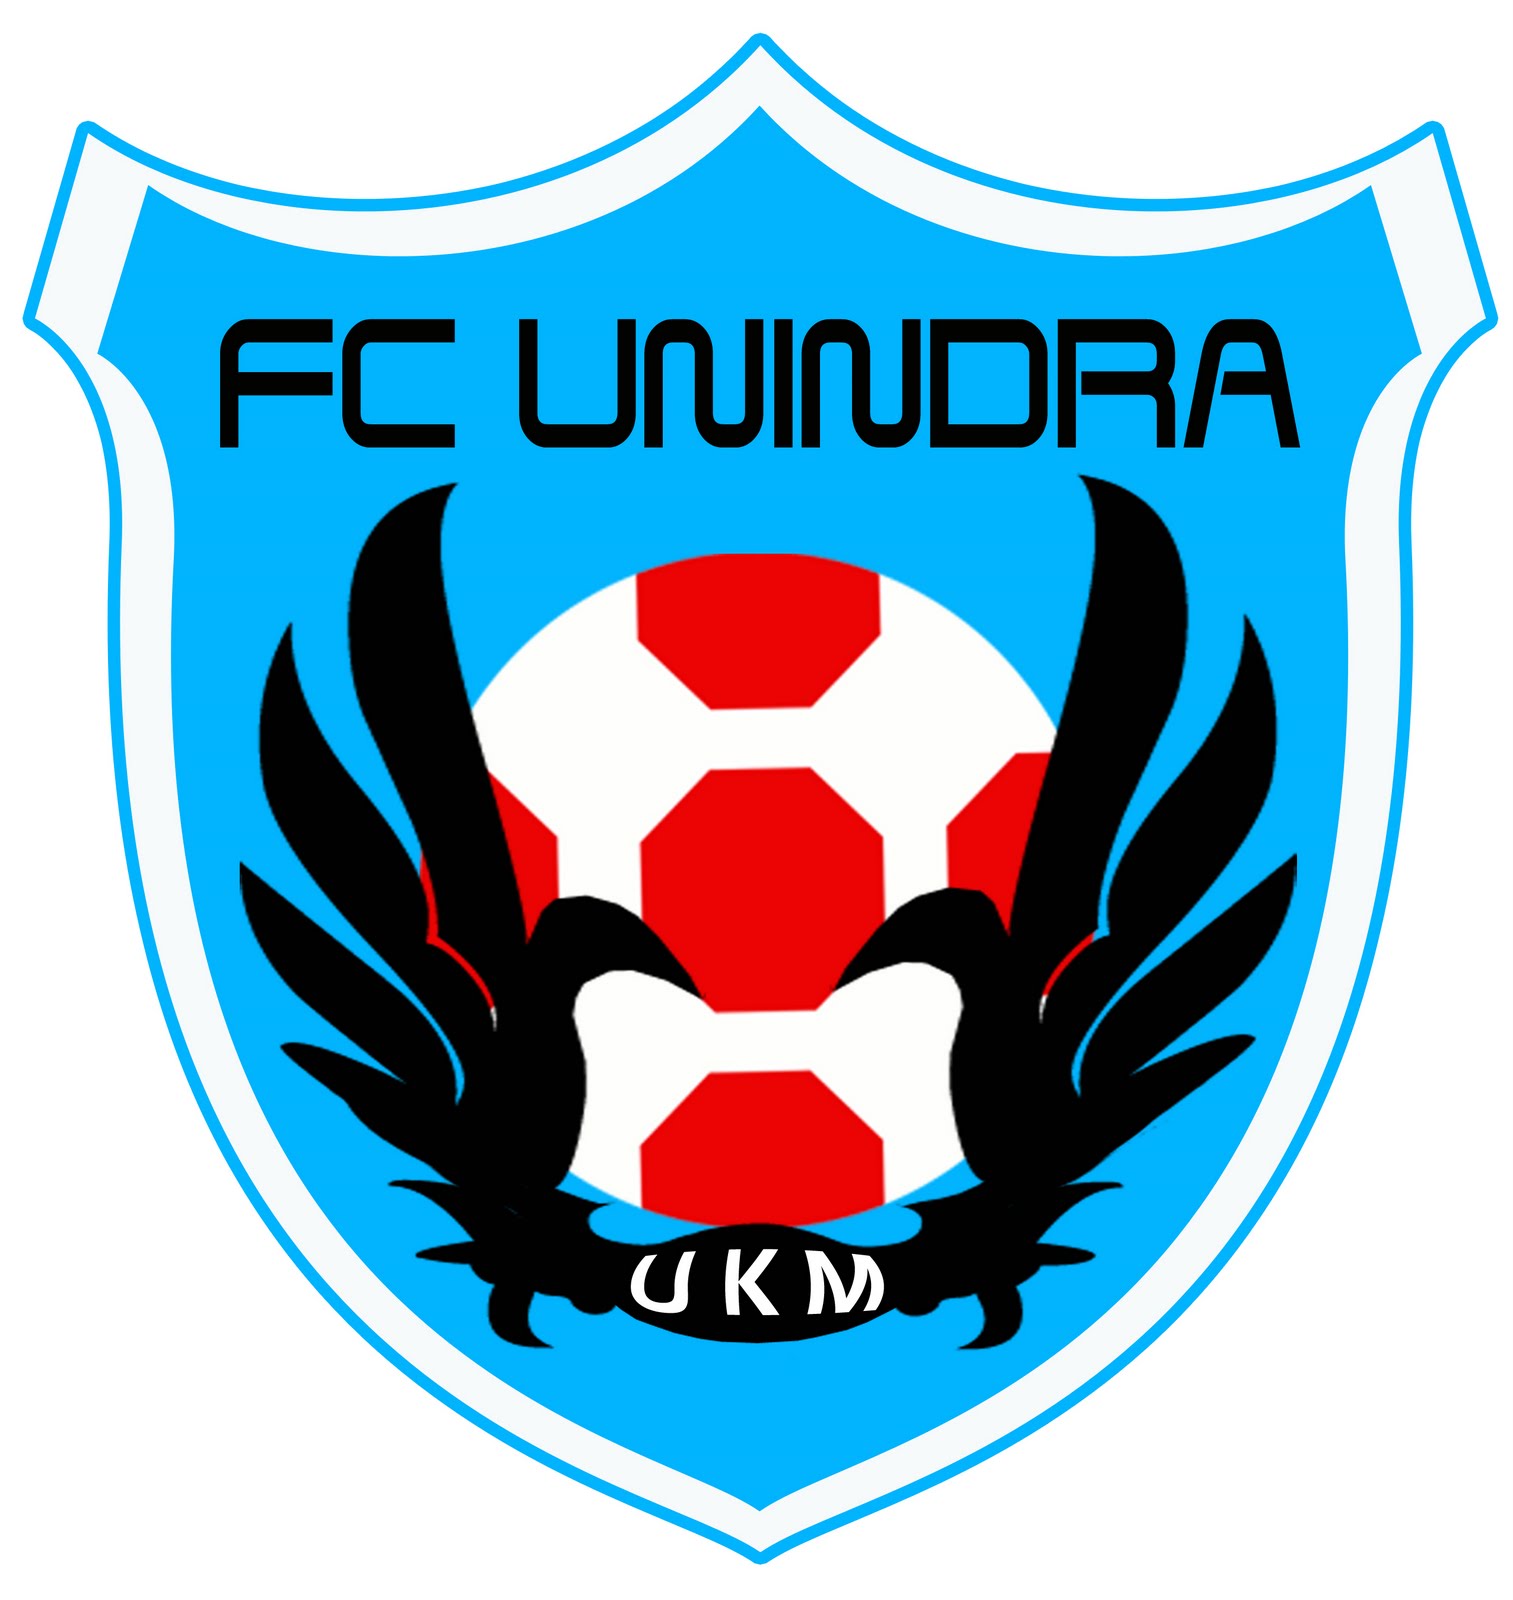 Bola Logo